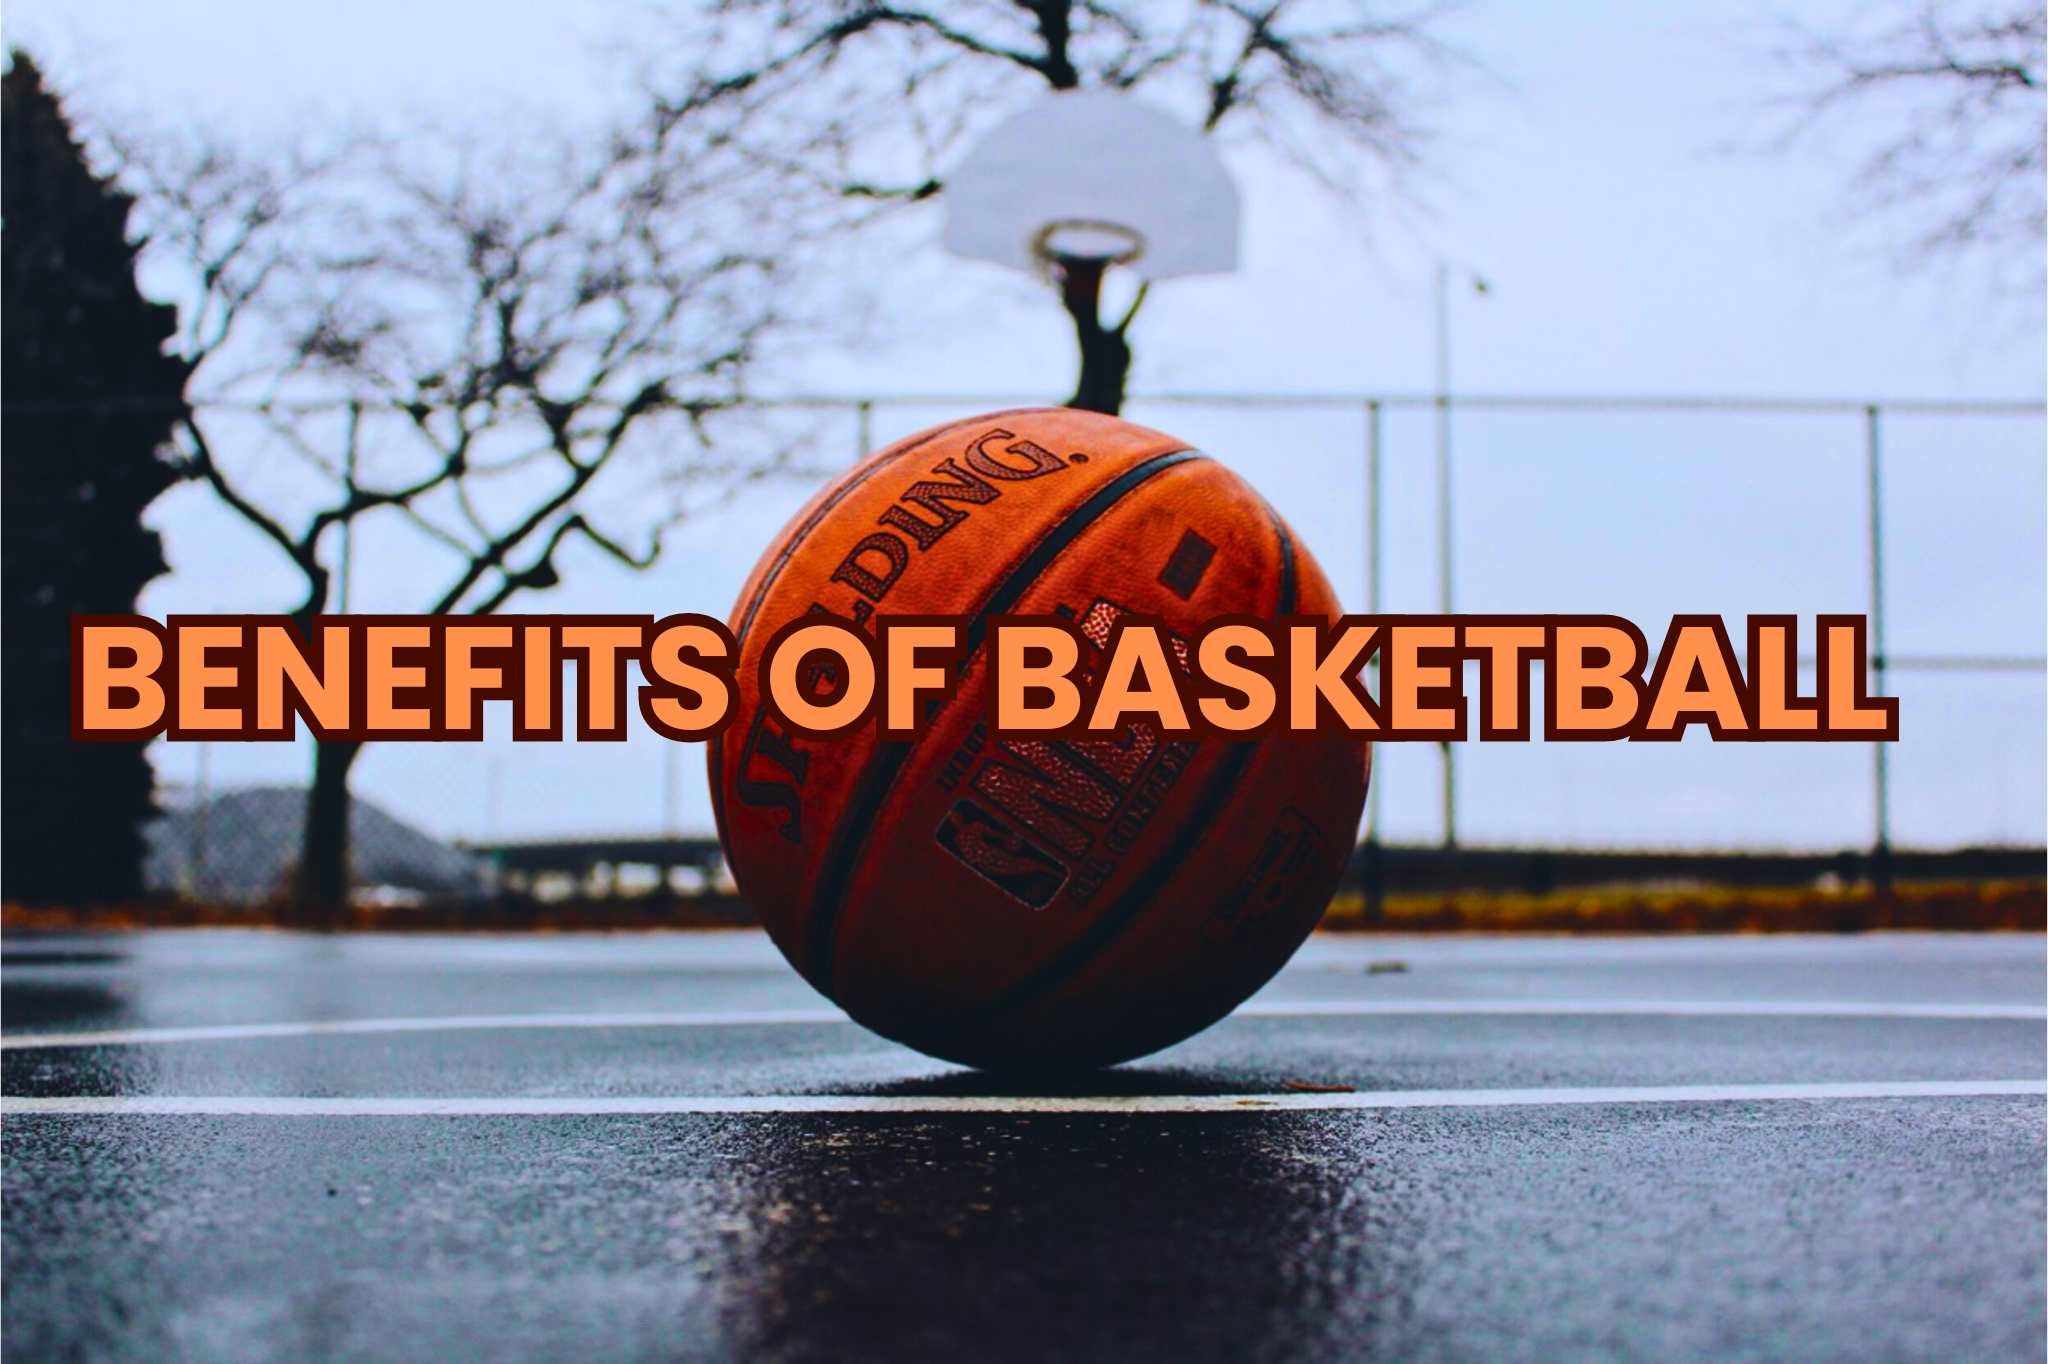 Benefits of Basketball